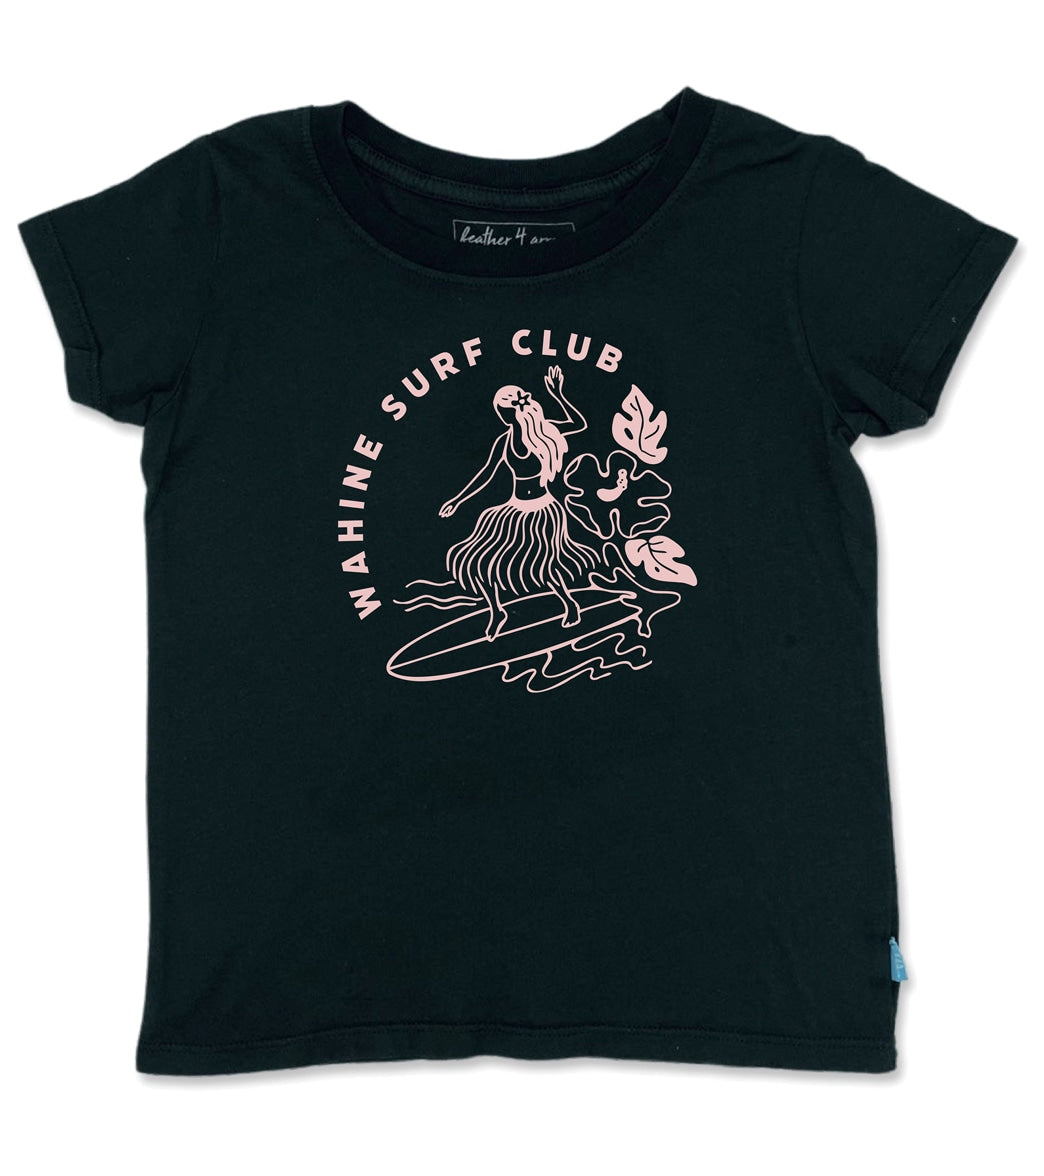 Feather 4 Arrow Girls Wahine Surf Club Everyday Tee (Baby, Toddler, Little Kid, Big Kid)